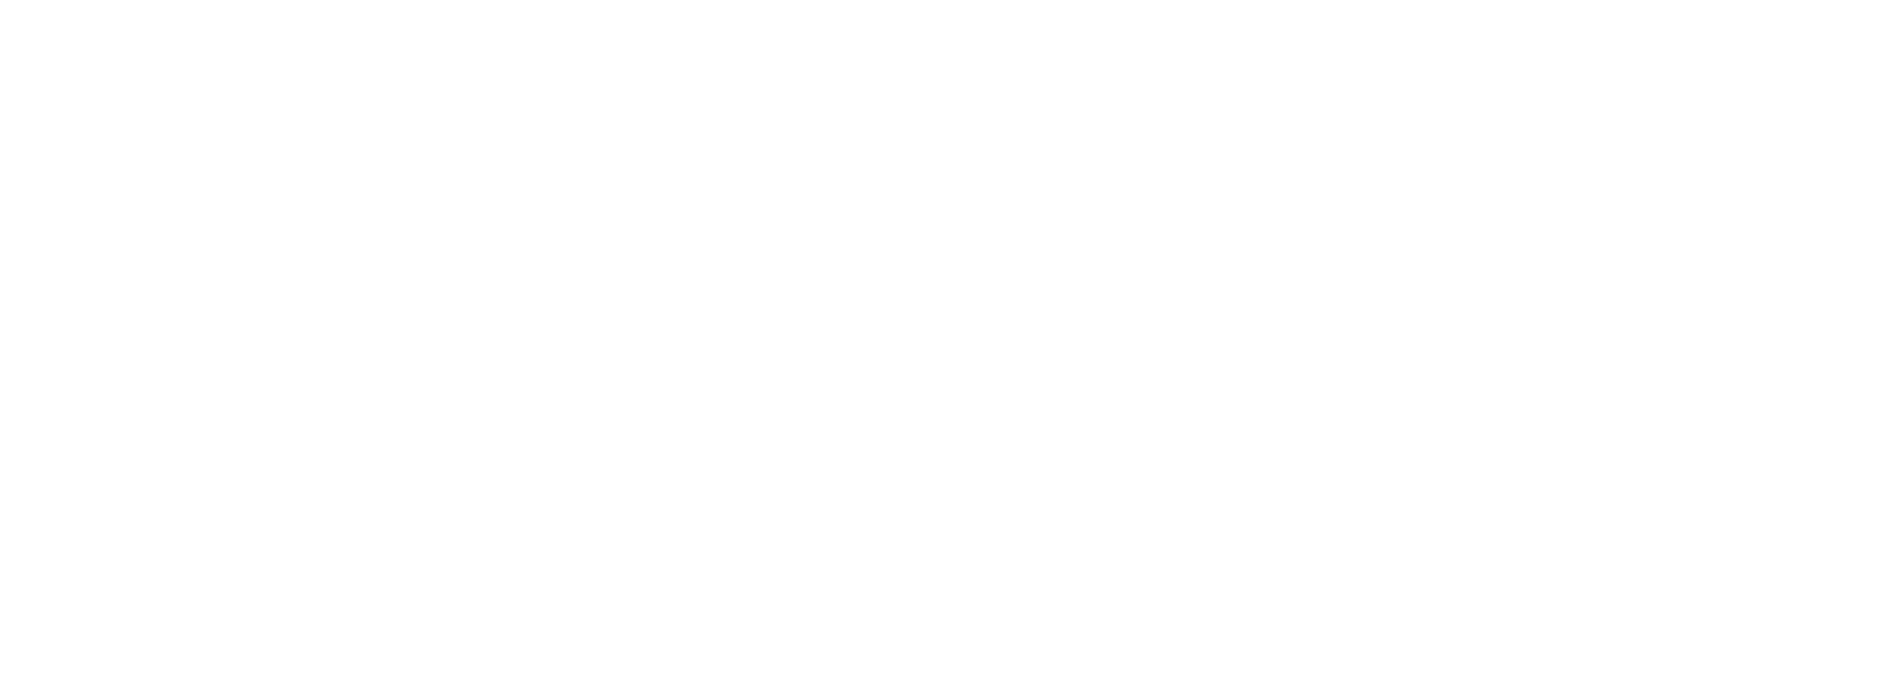 Medicus Logo Homepage